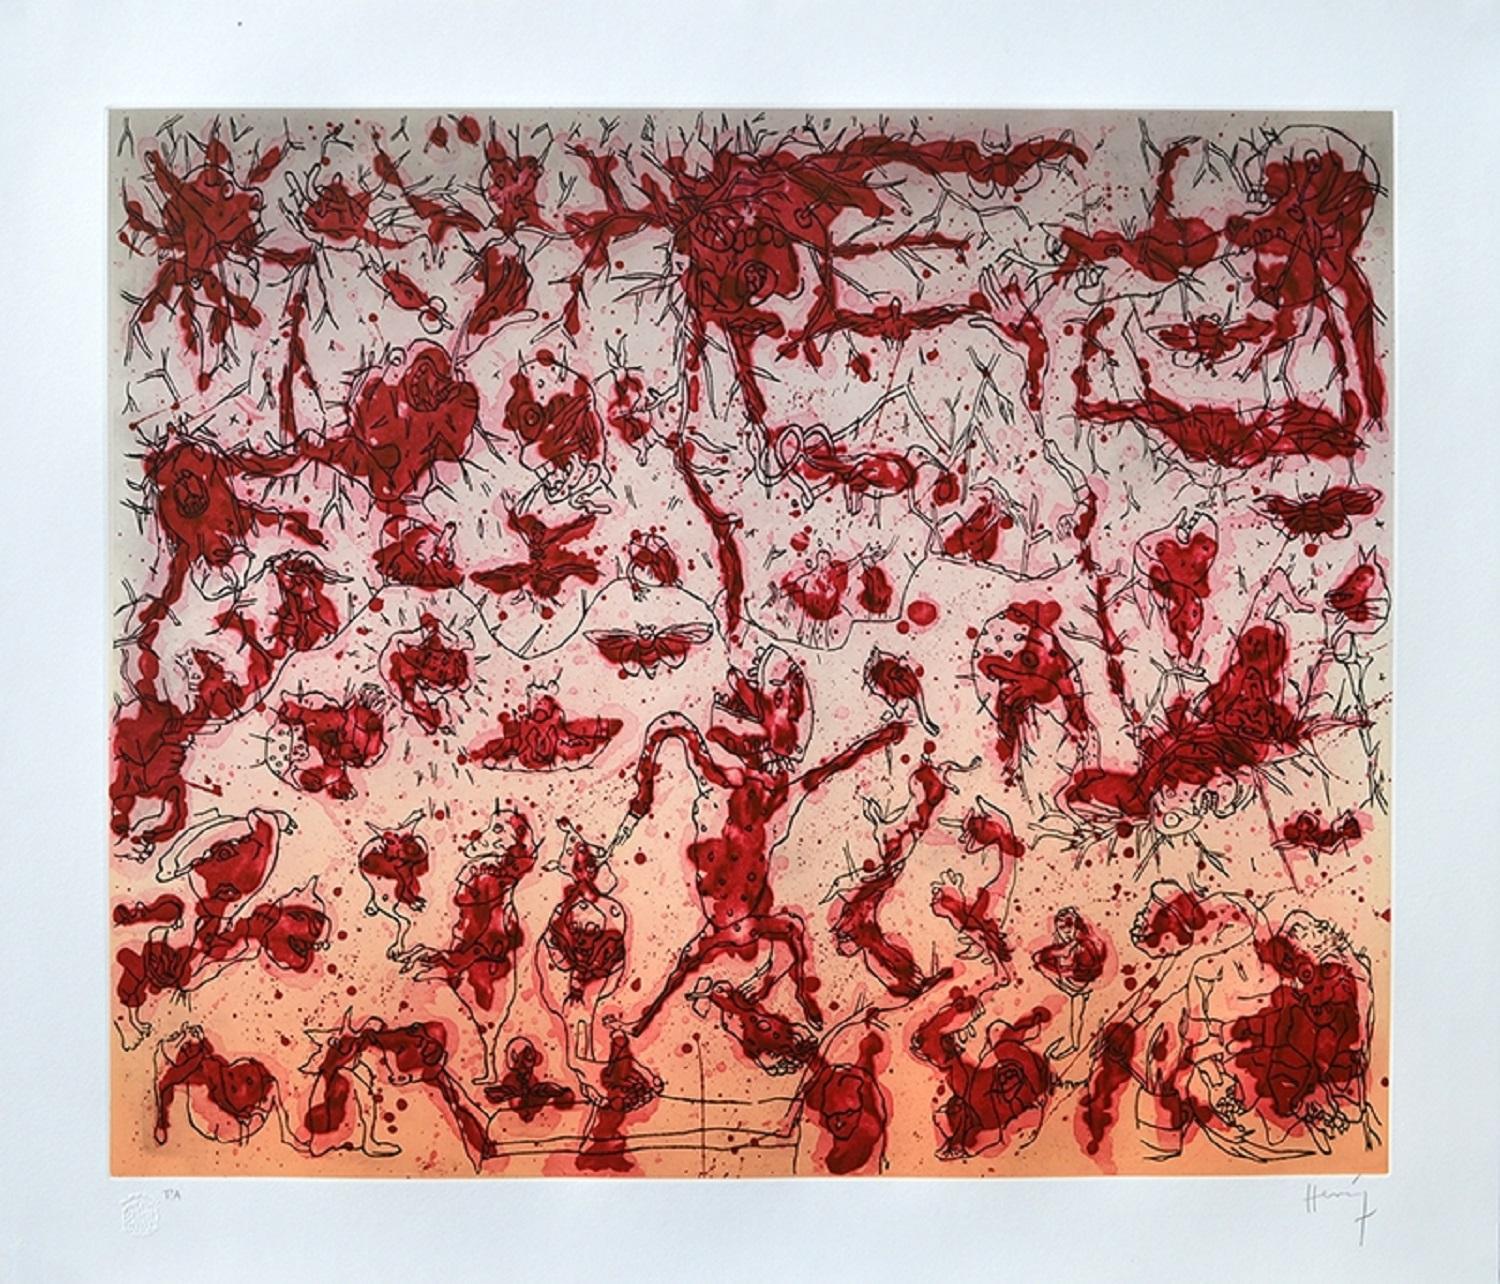 Sergio Hernández, 'Untitled', 2015, Engraving, 28.9x33.9 in